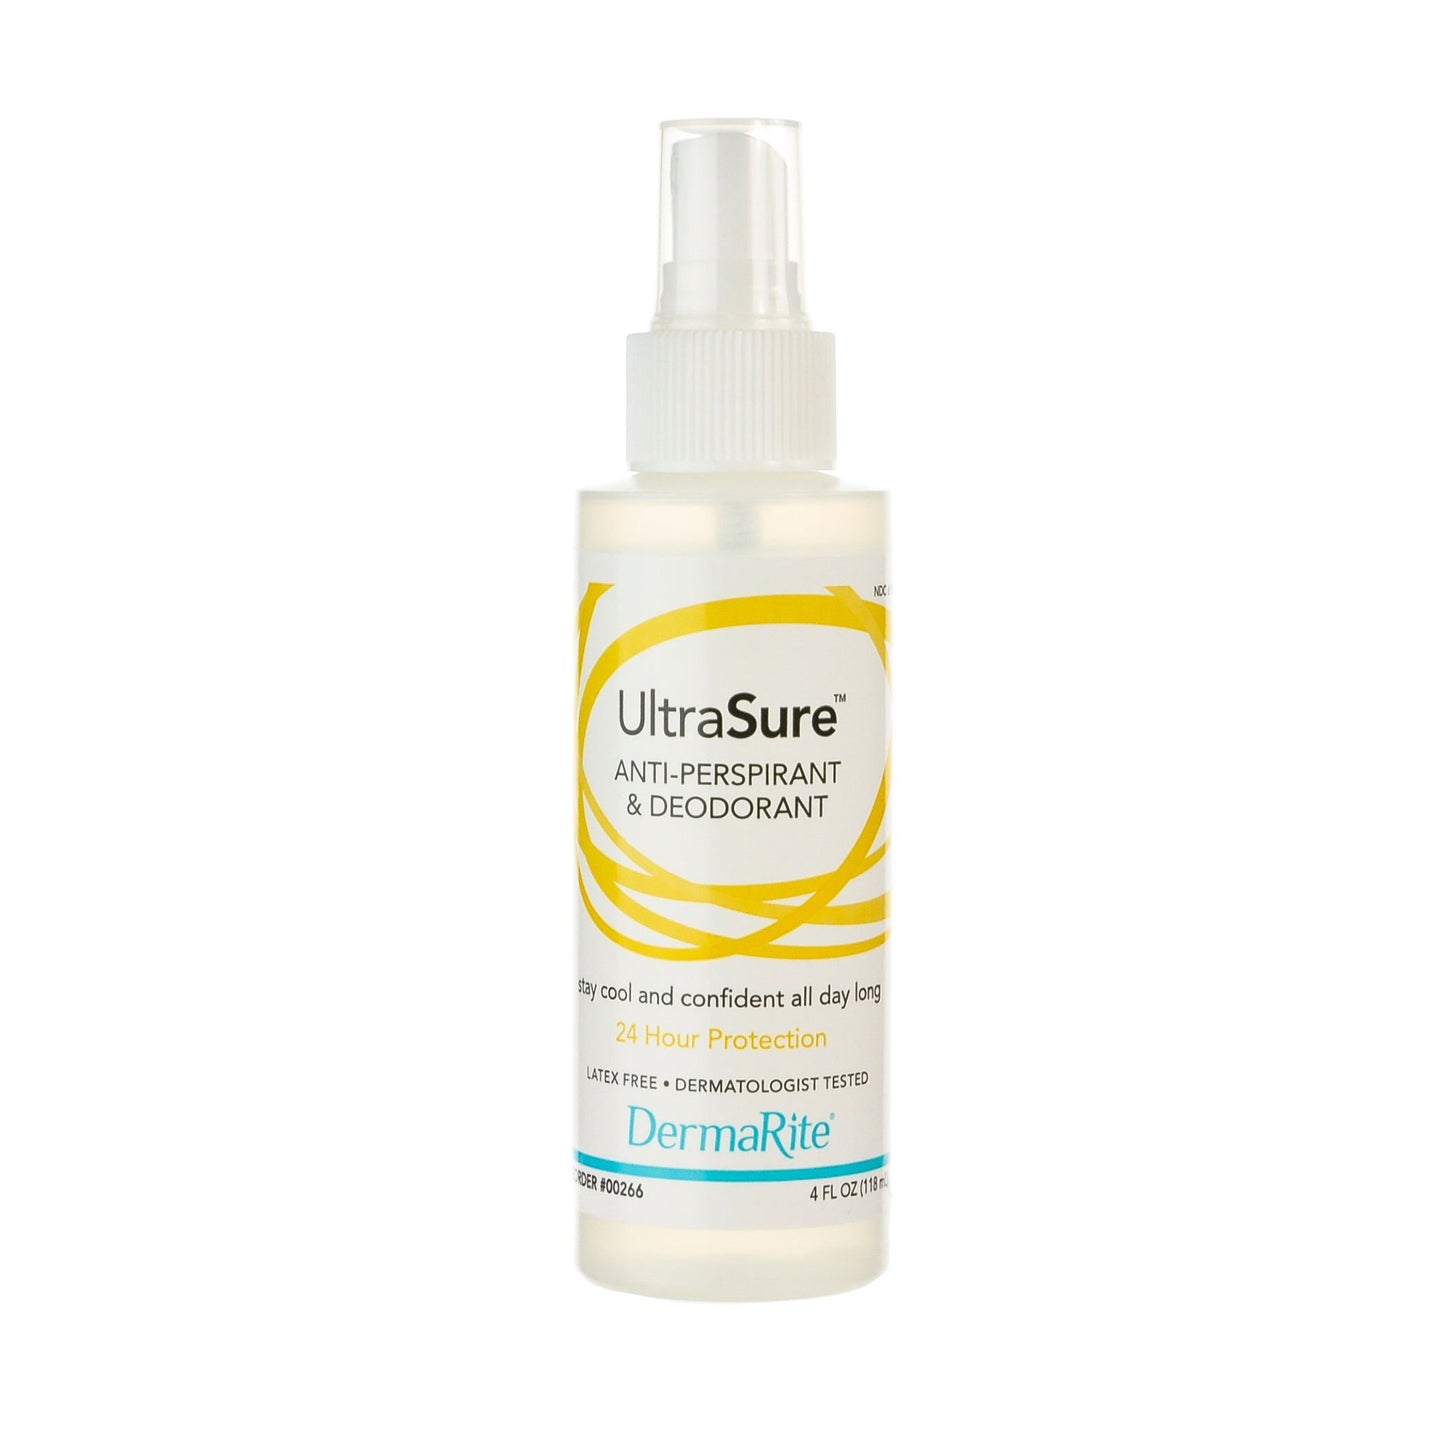 DermaRite Antiperspirant / Deodorant UltraSure Pump Spray 4 oz. - 00266